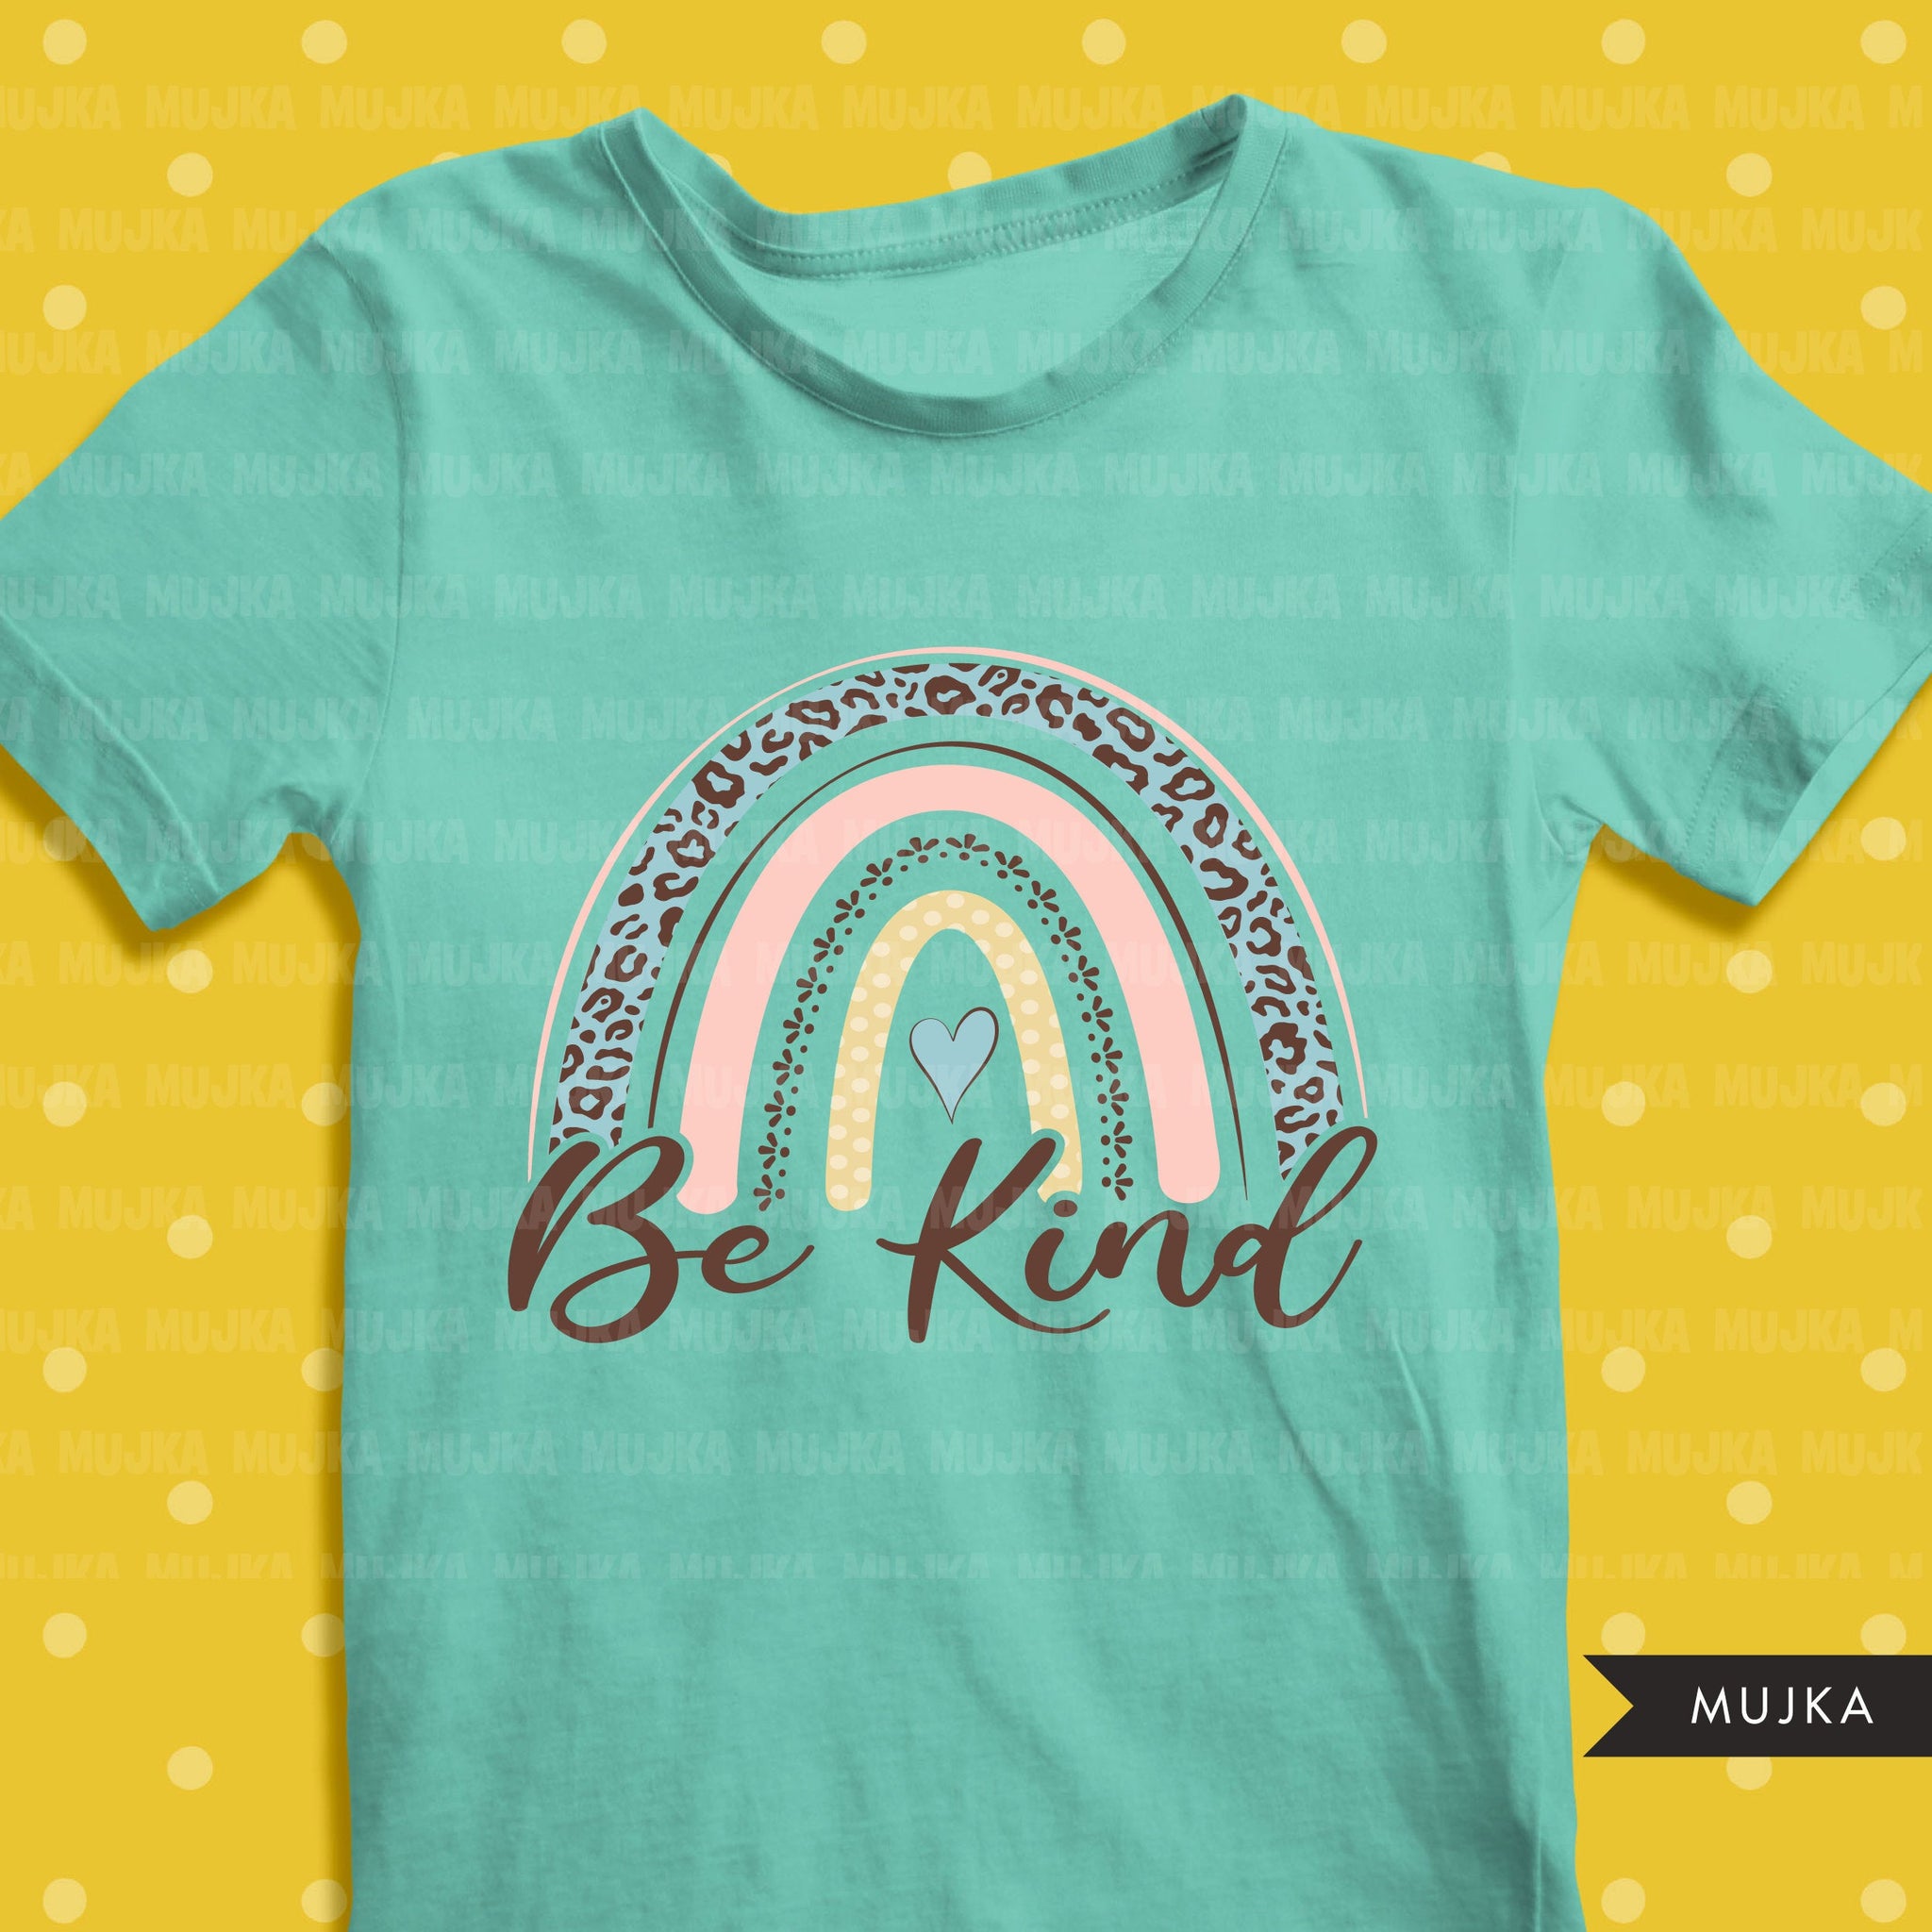 Be Kind rainbow, be kind sublimation, Boho rainbow clipart, be kind shirt design, leopard print, PNG digital download files for cricut